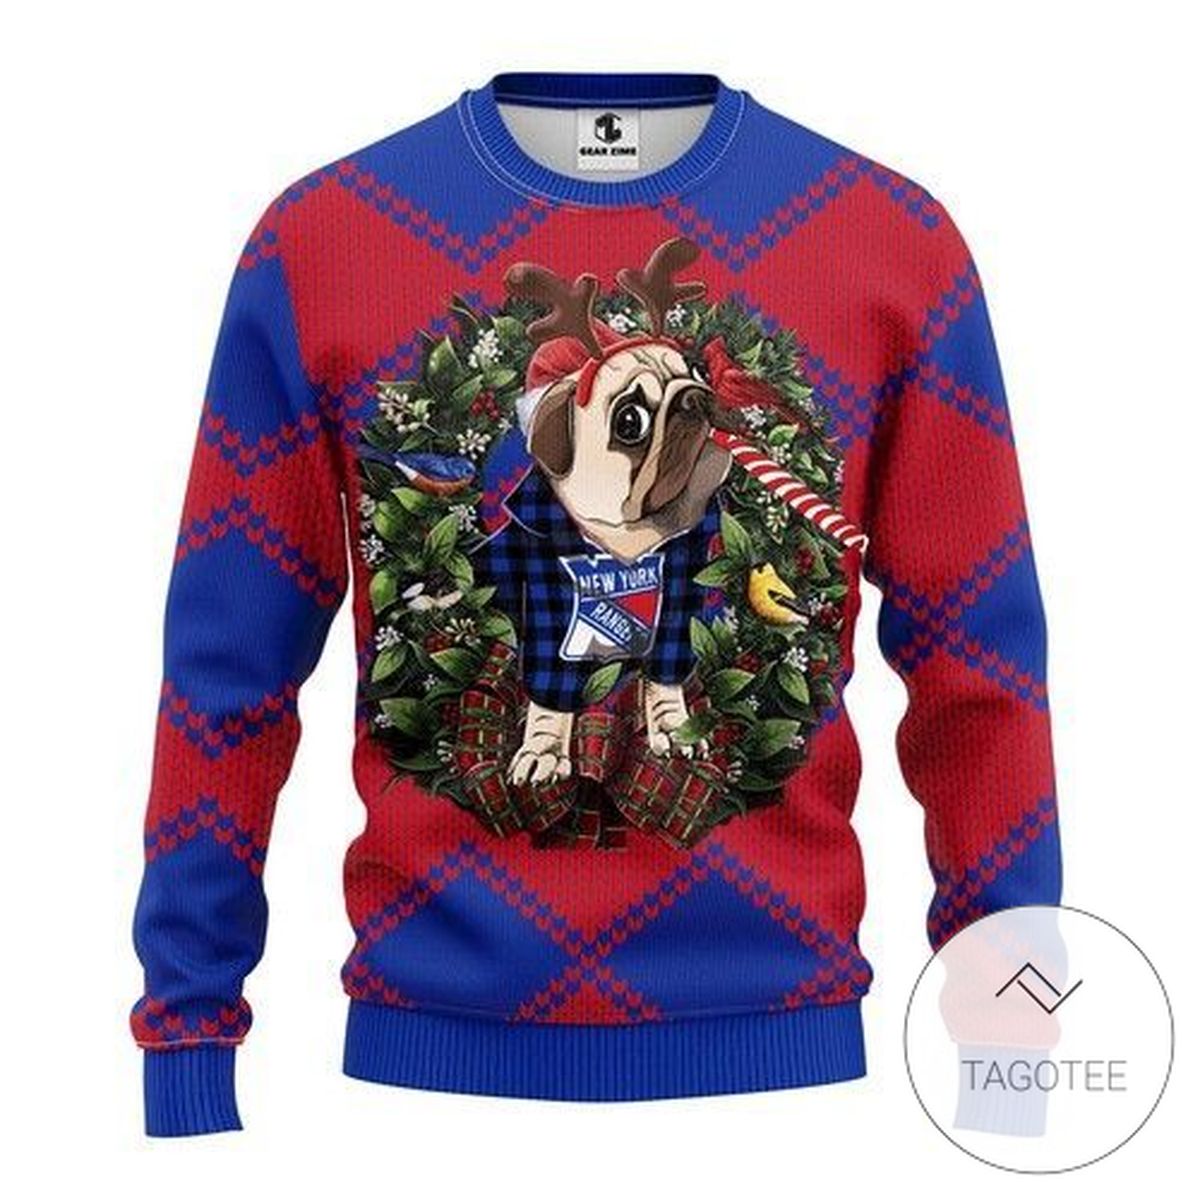 Nhl New York Rangers Pug Dog Sweatshirt Knitted Ugly Christmas Sweater